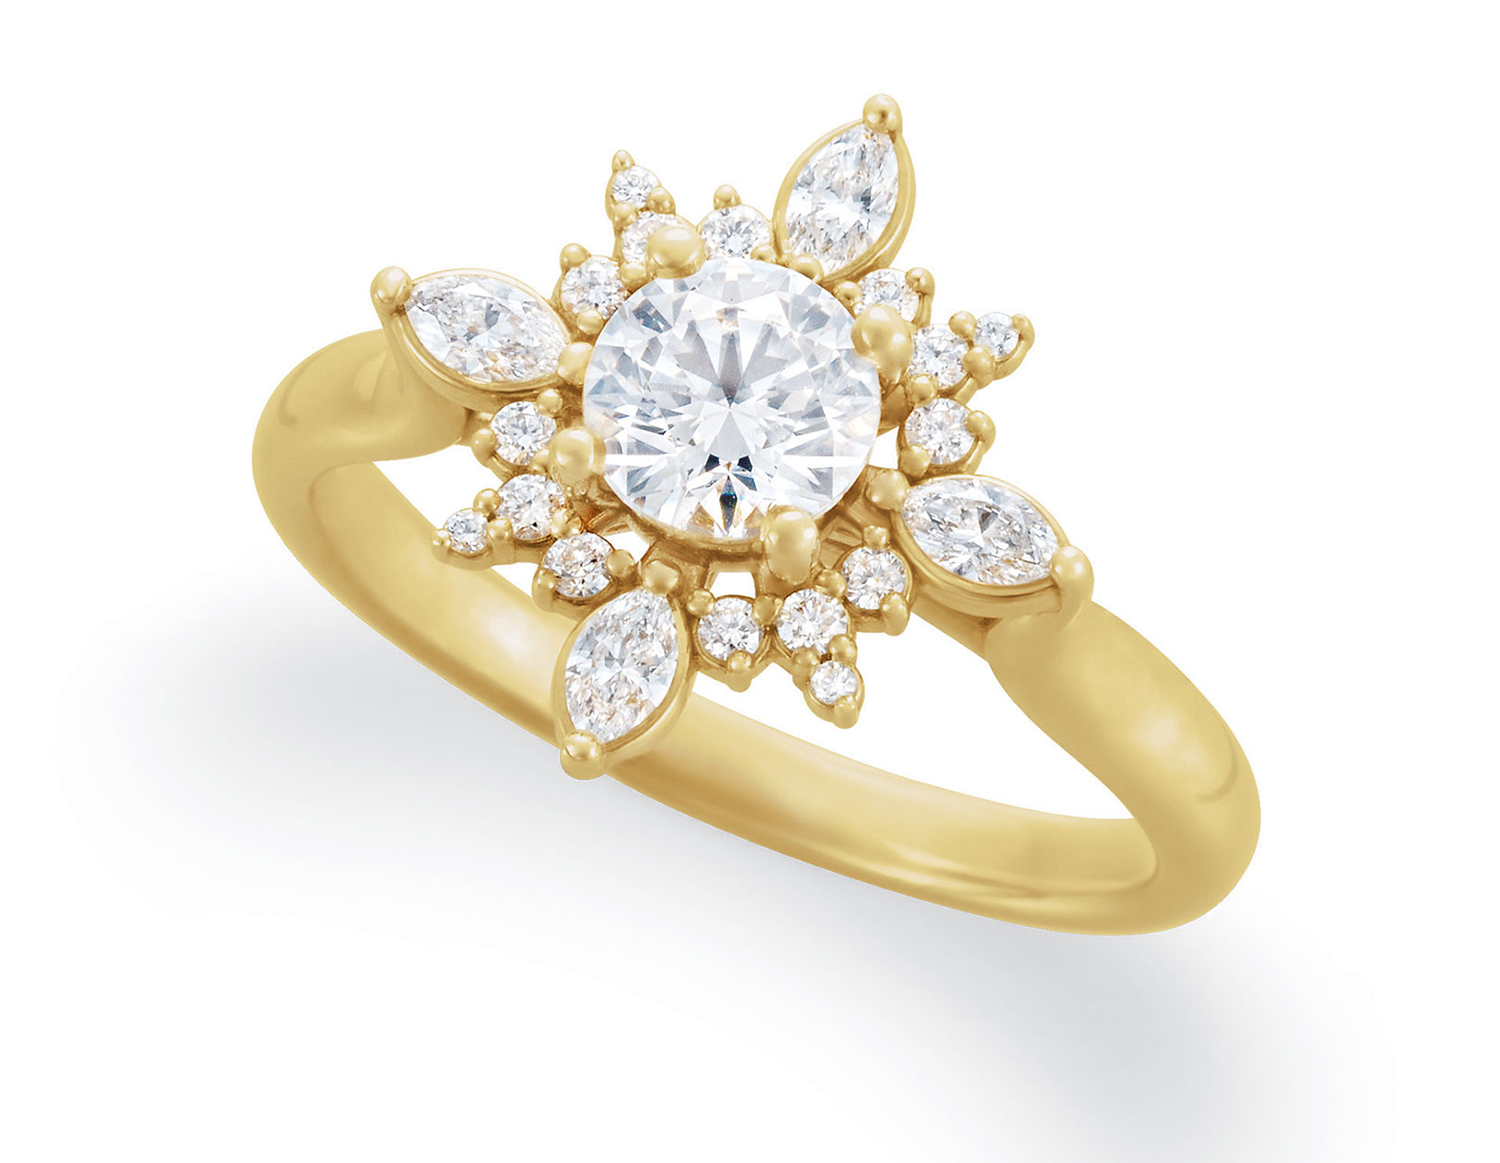 INSTORE Design Awards 2021 &#8211; Best Engagement/Wedding Jewelry Under $5,000